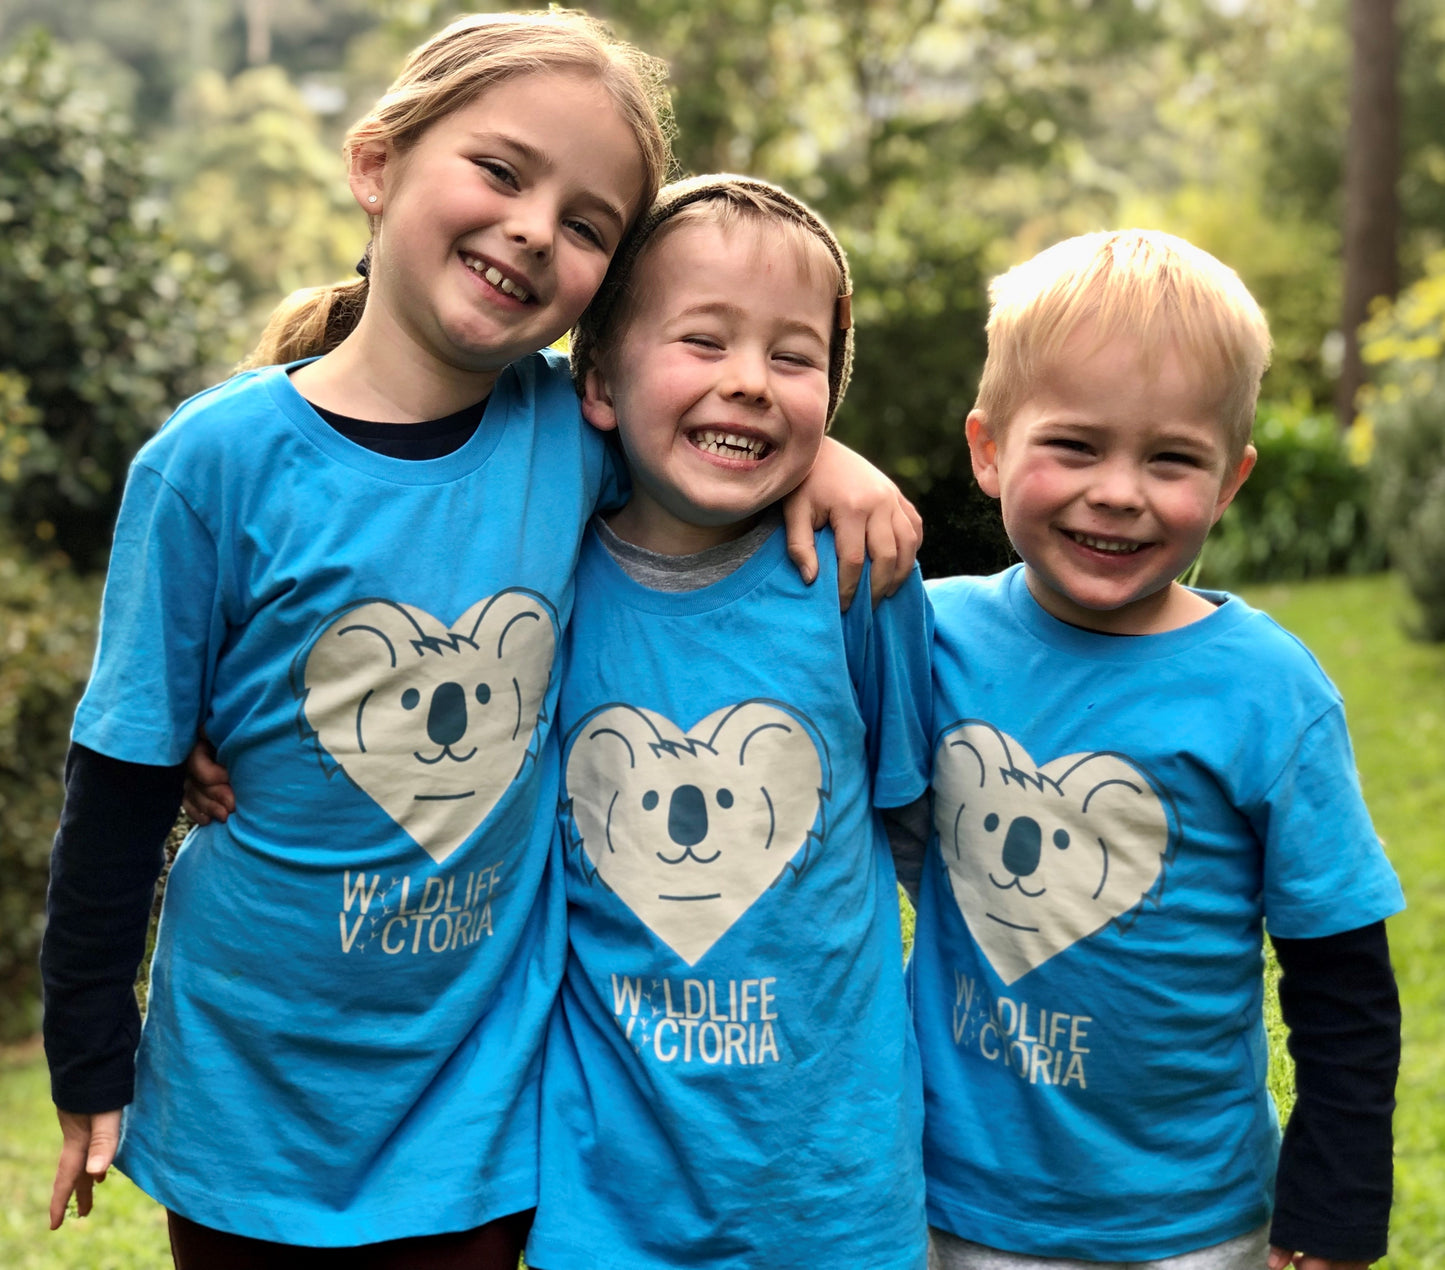 Kids Koala Love T-shirt - Blue